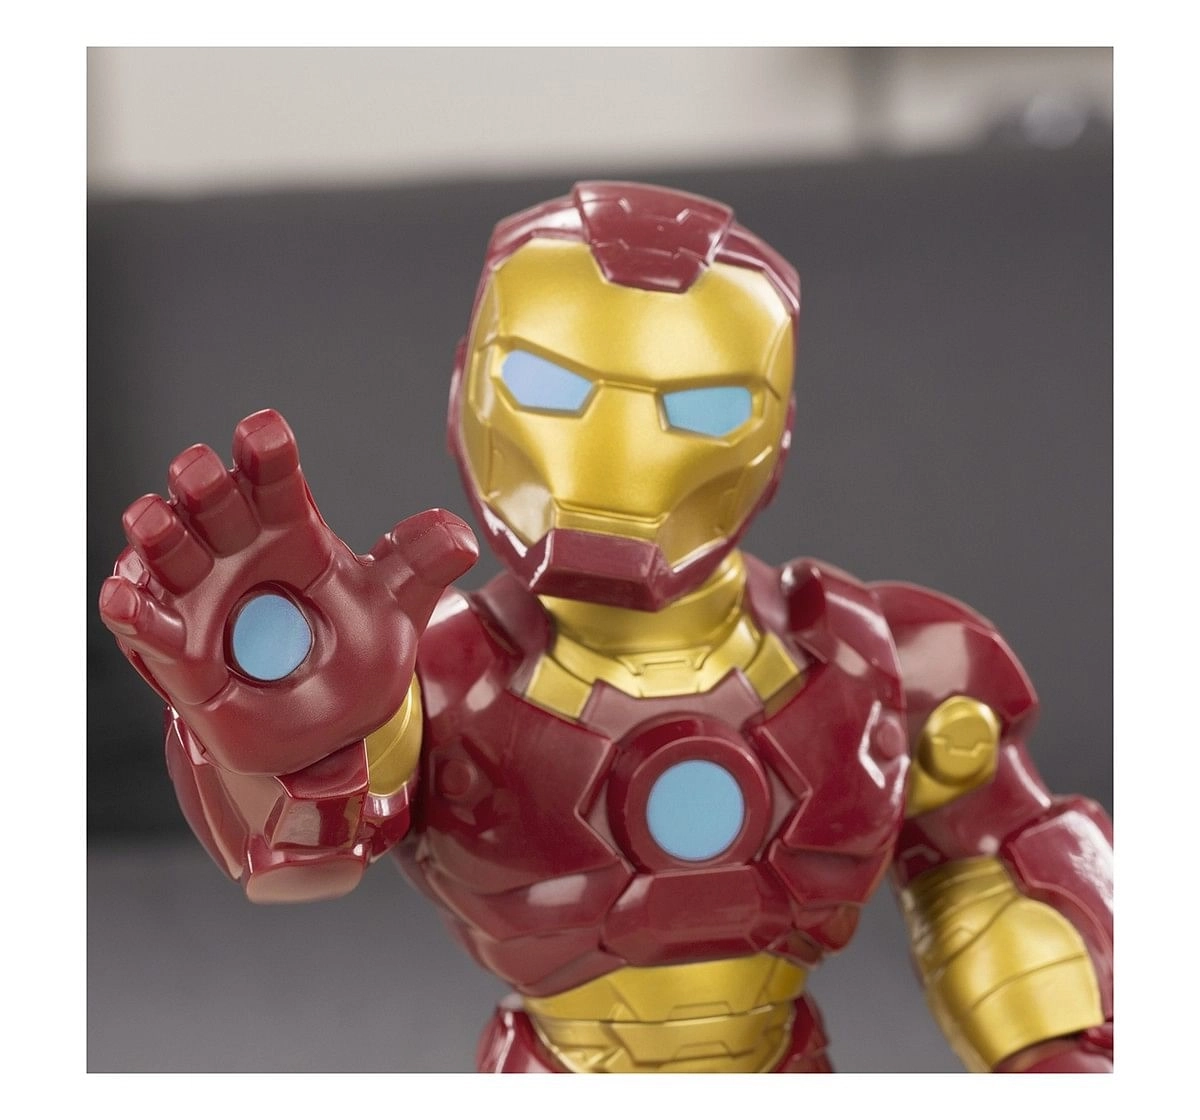 Marvel Super Hero Adventure Mega Mighties Iron Man Activity Toys for age 3Y+ 